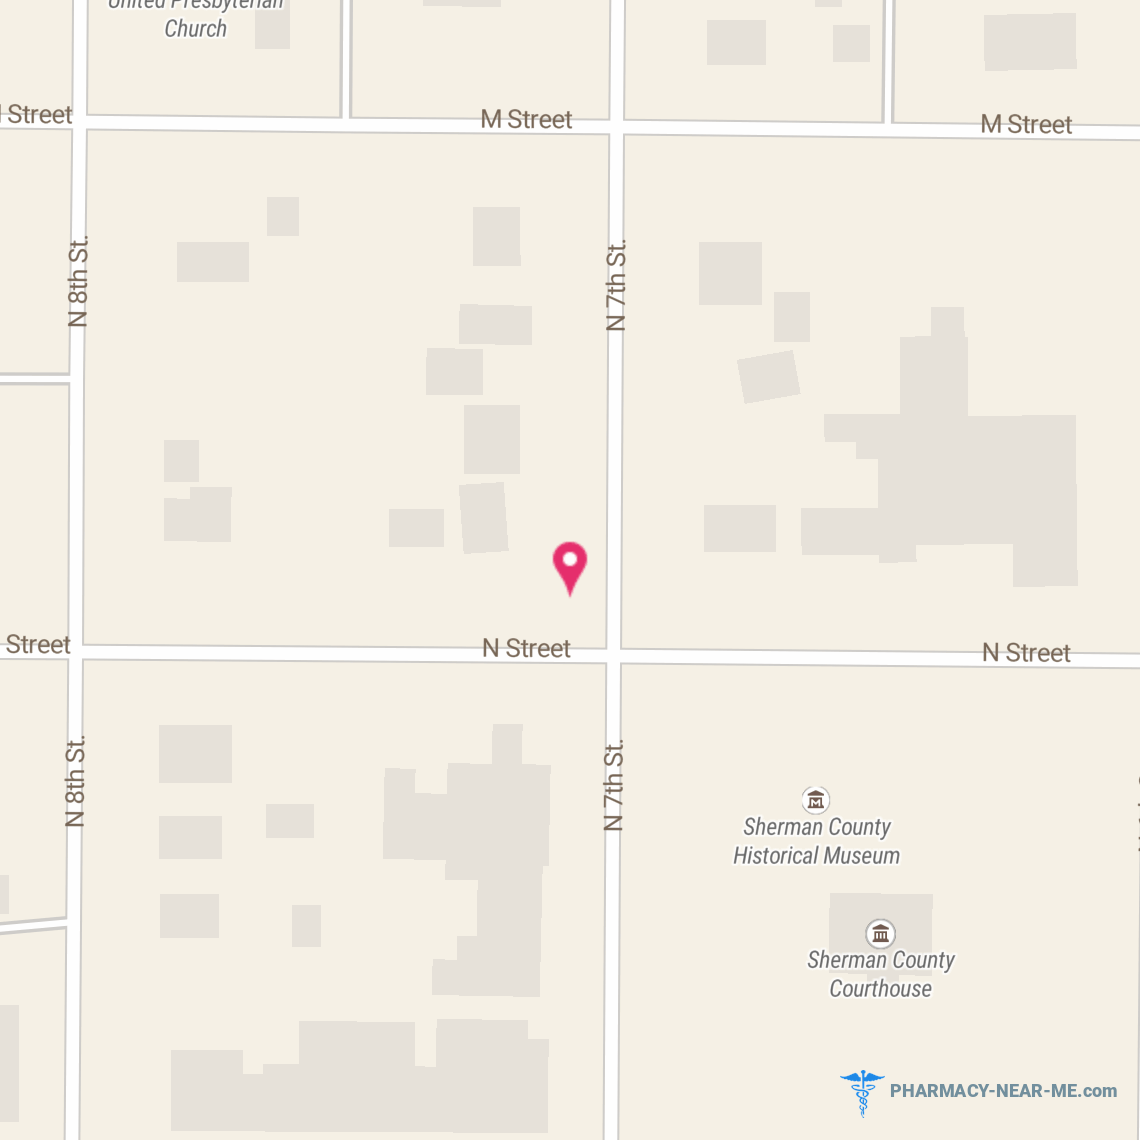 LOUP CITY RX SHOPPE - Pharmacy Hours, Phone, Reviews & Information: 133 South 7th Street, Loup City, Nebraska 68853, United States